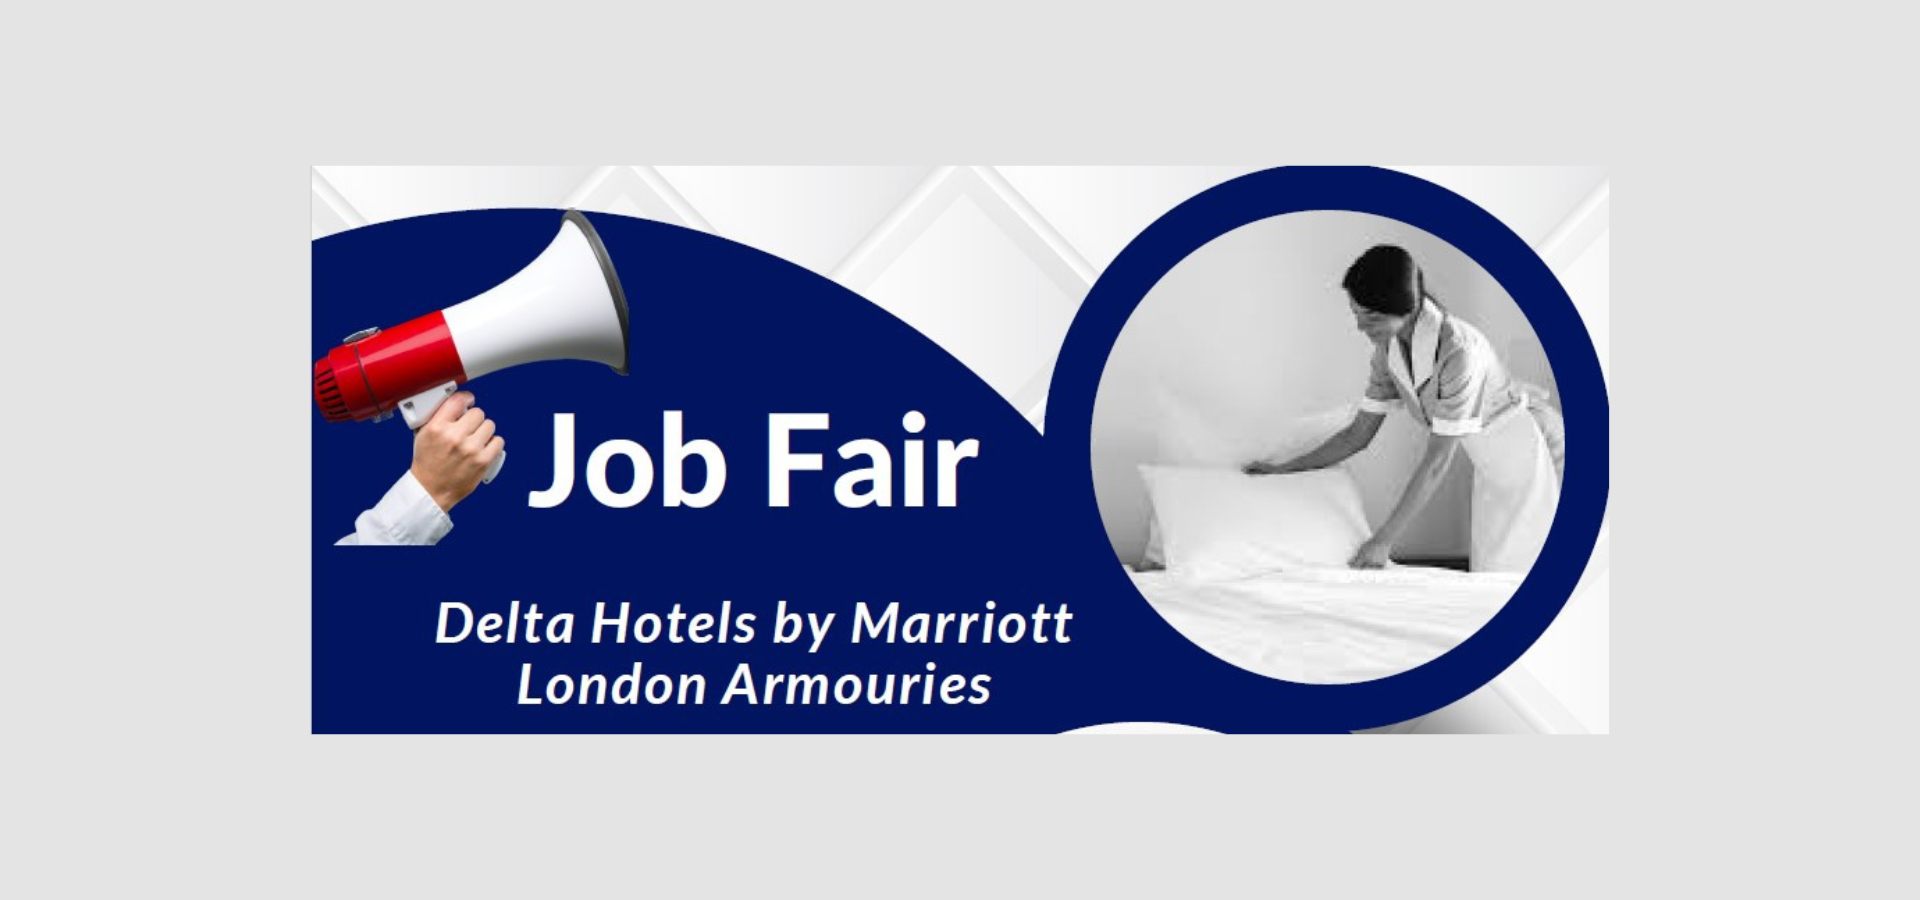 Delta Hotels by Marriott London Armouries Job Fair London Economic